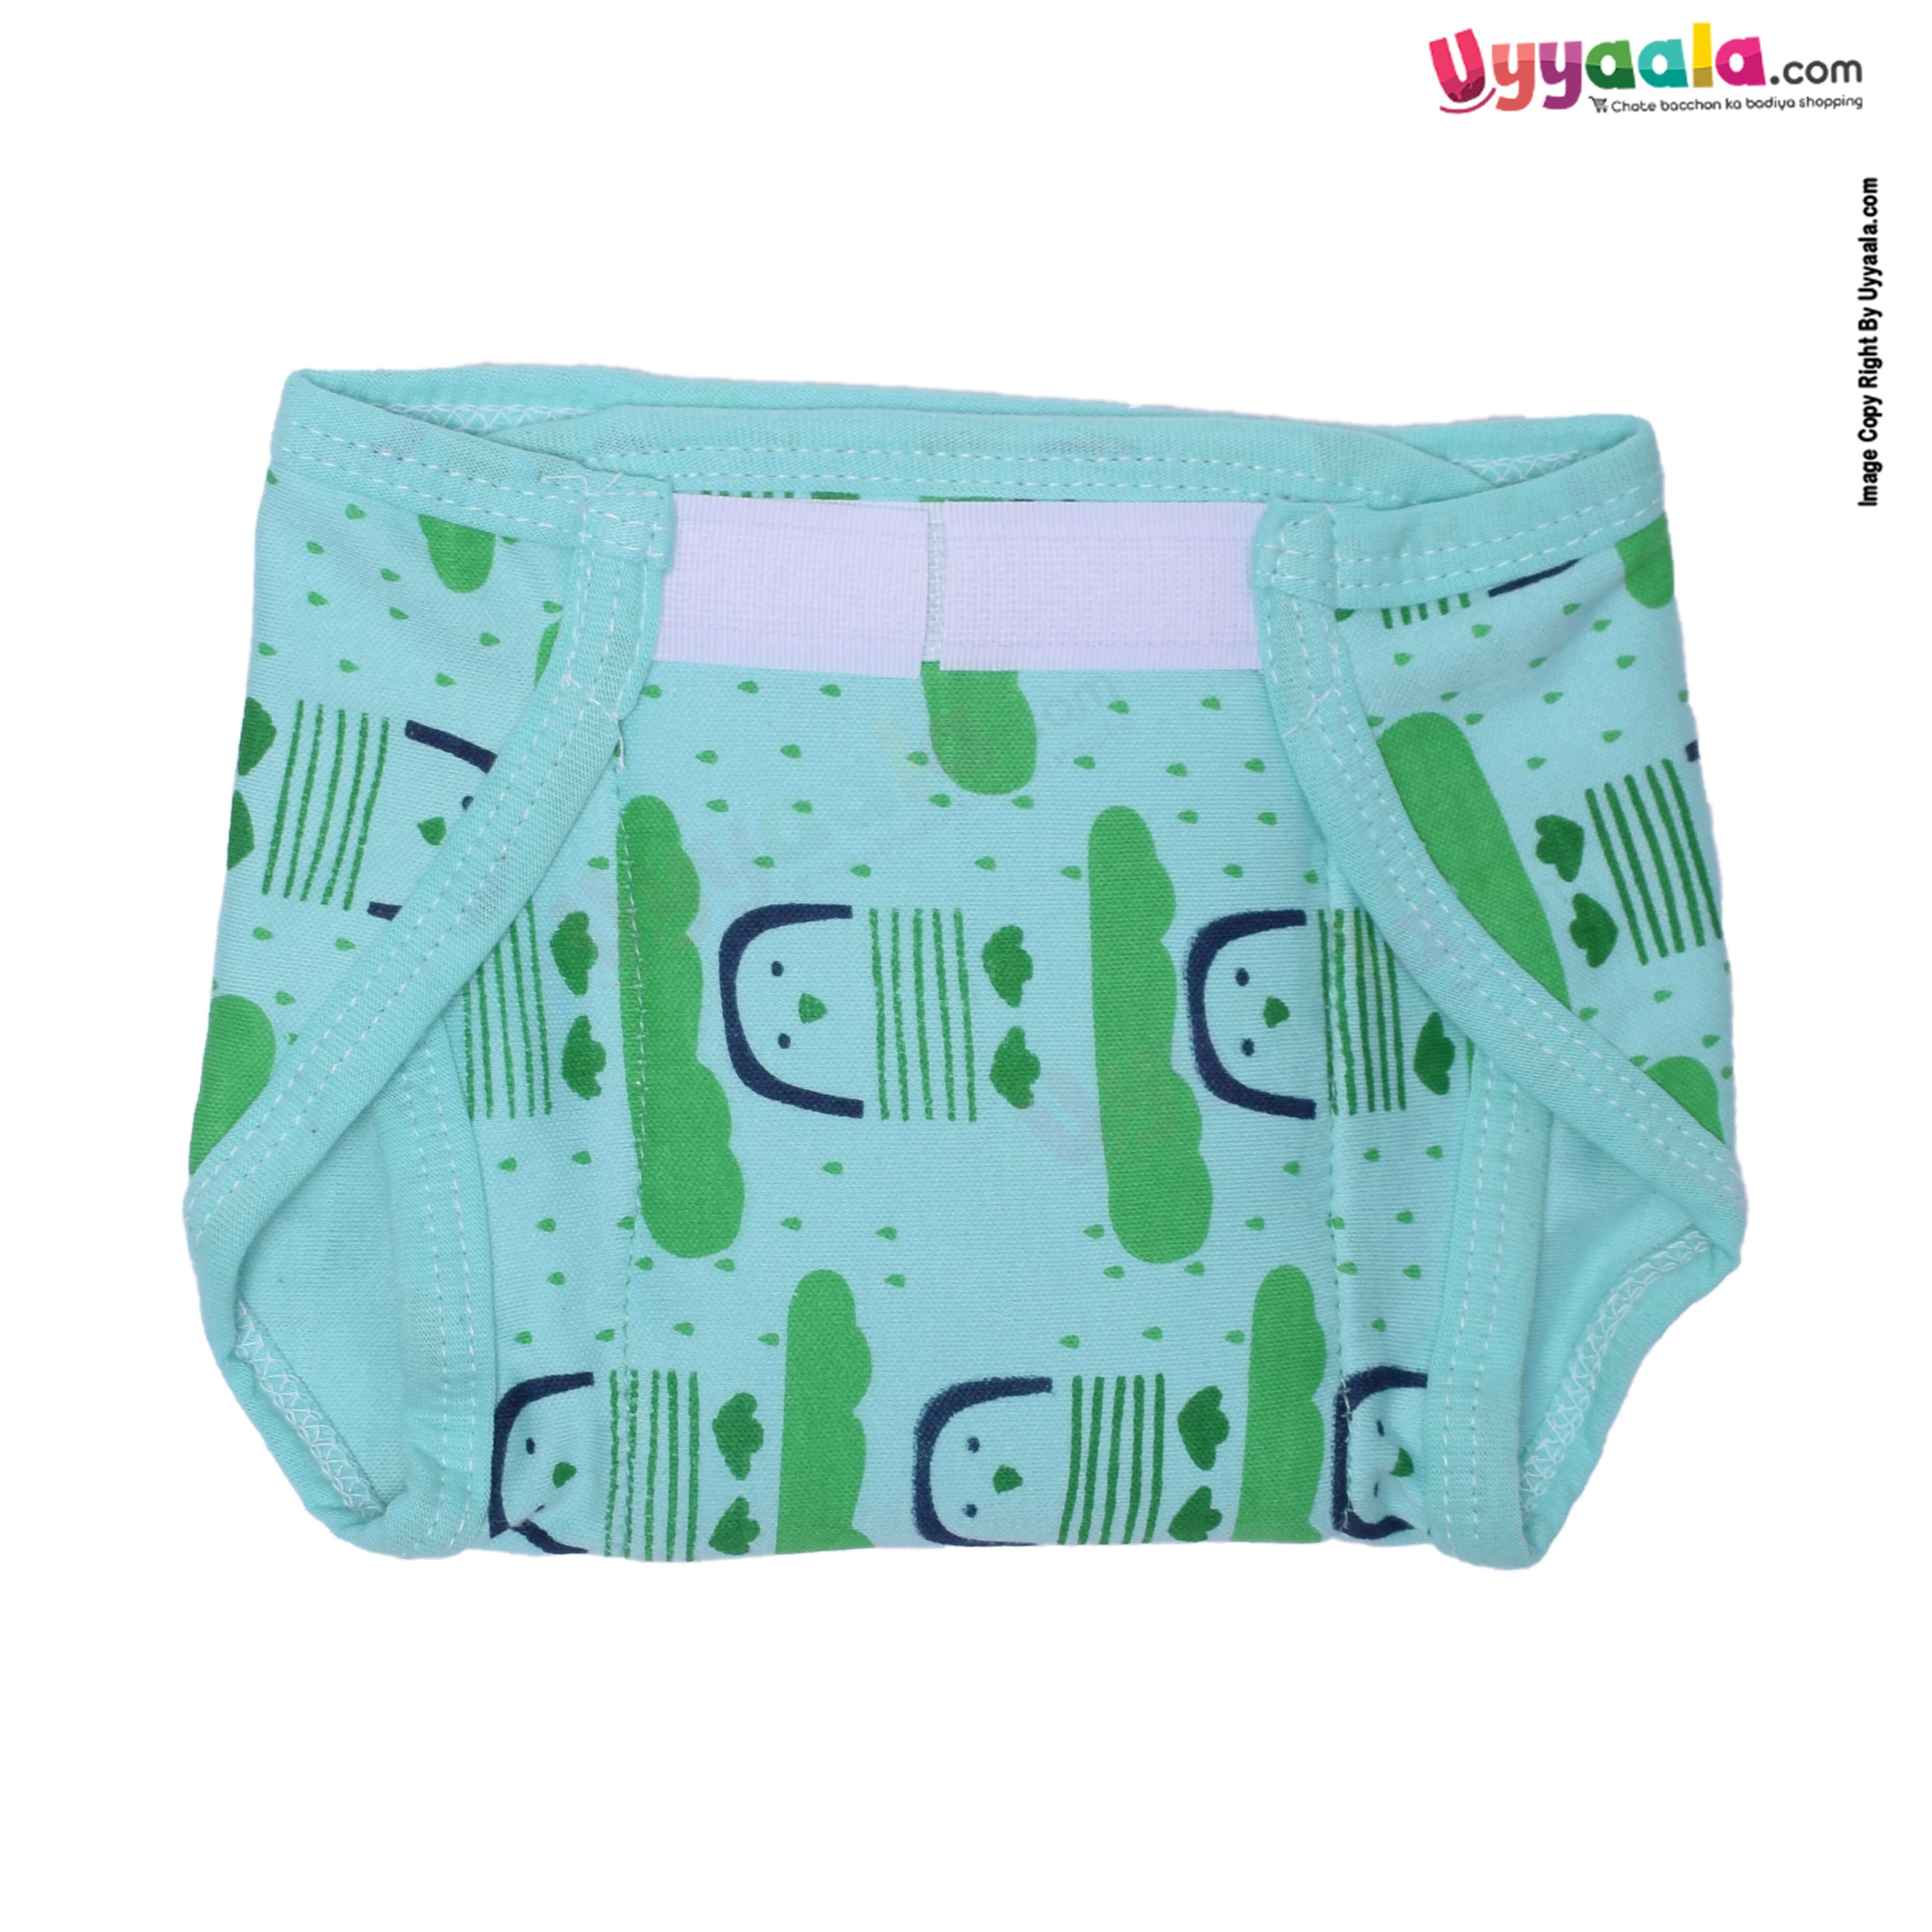 COZYCARE Washable Diapers Hosiery Velcro Penguin Print (Pink, Green) & Apple Print (Blue) 3Pcs Set (SS)